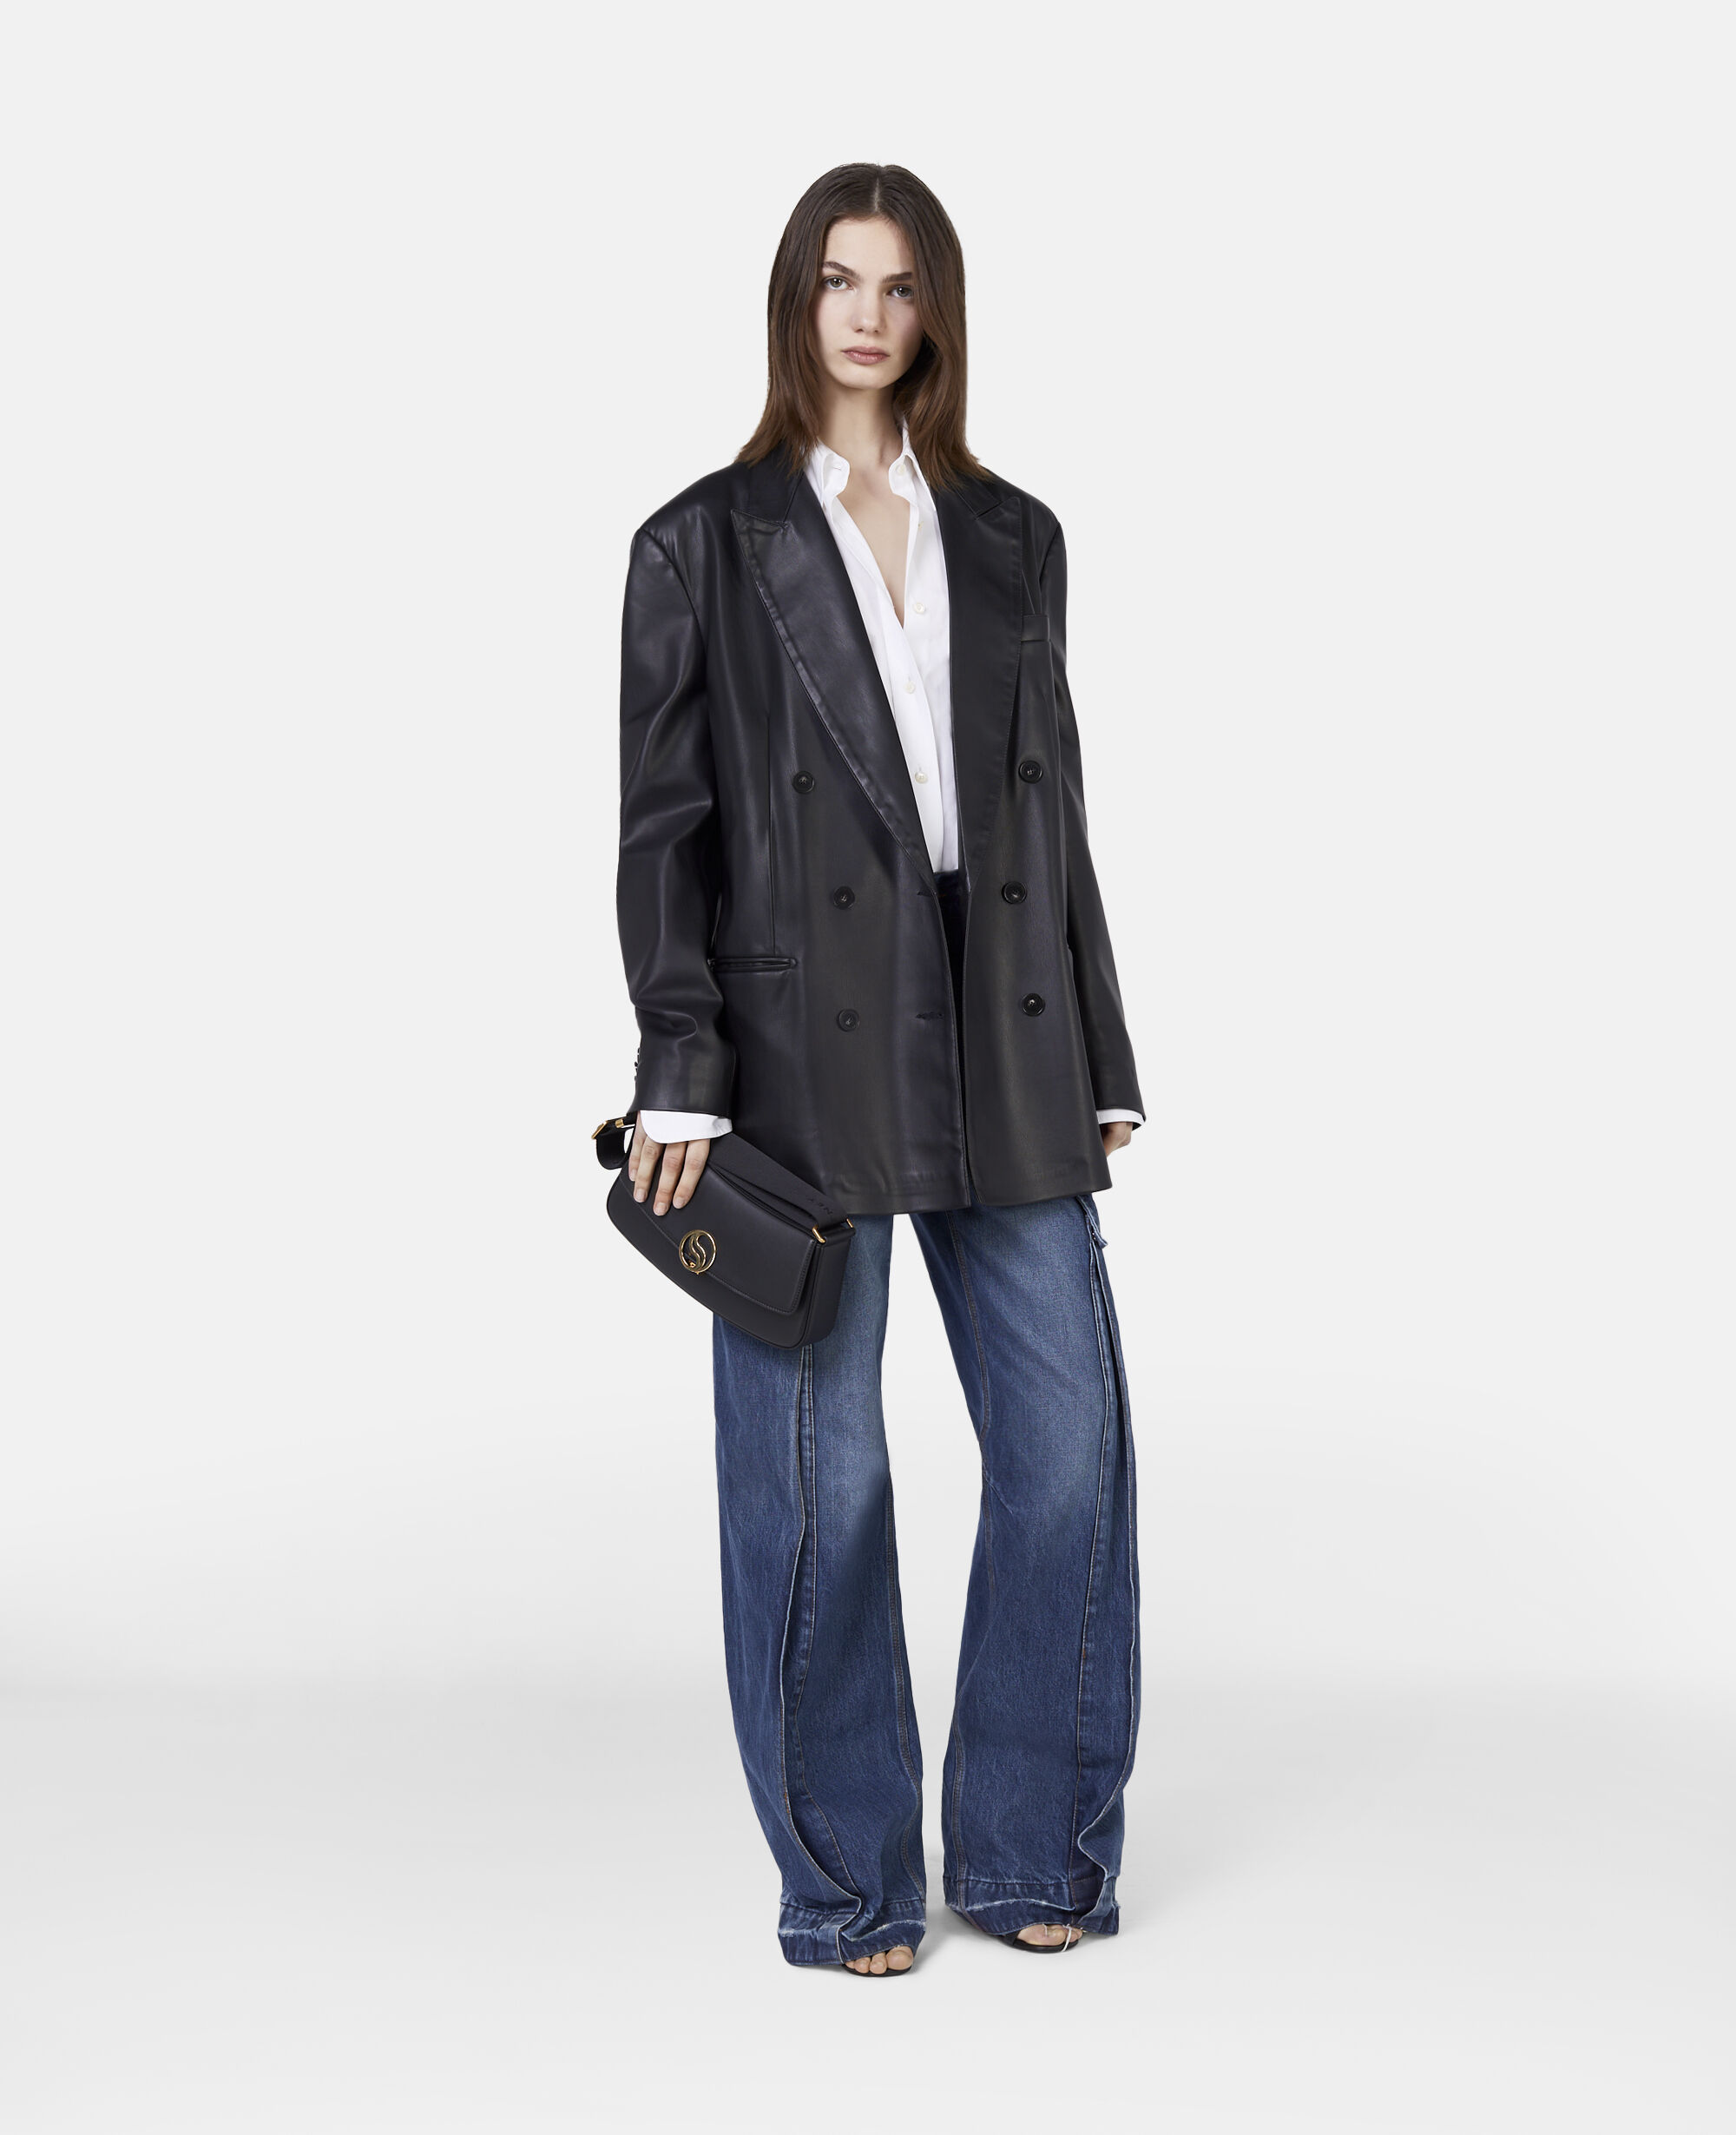 Stella McCartney CA | Designer RTW, Bags & accessories, Lingerie 